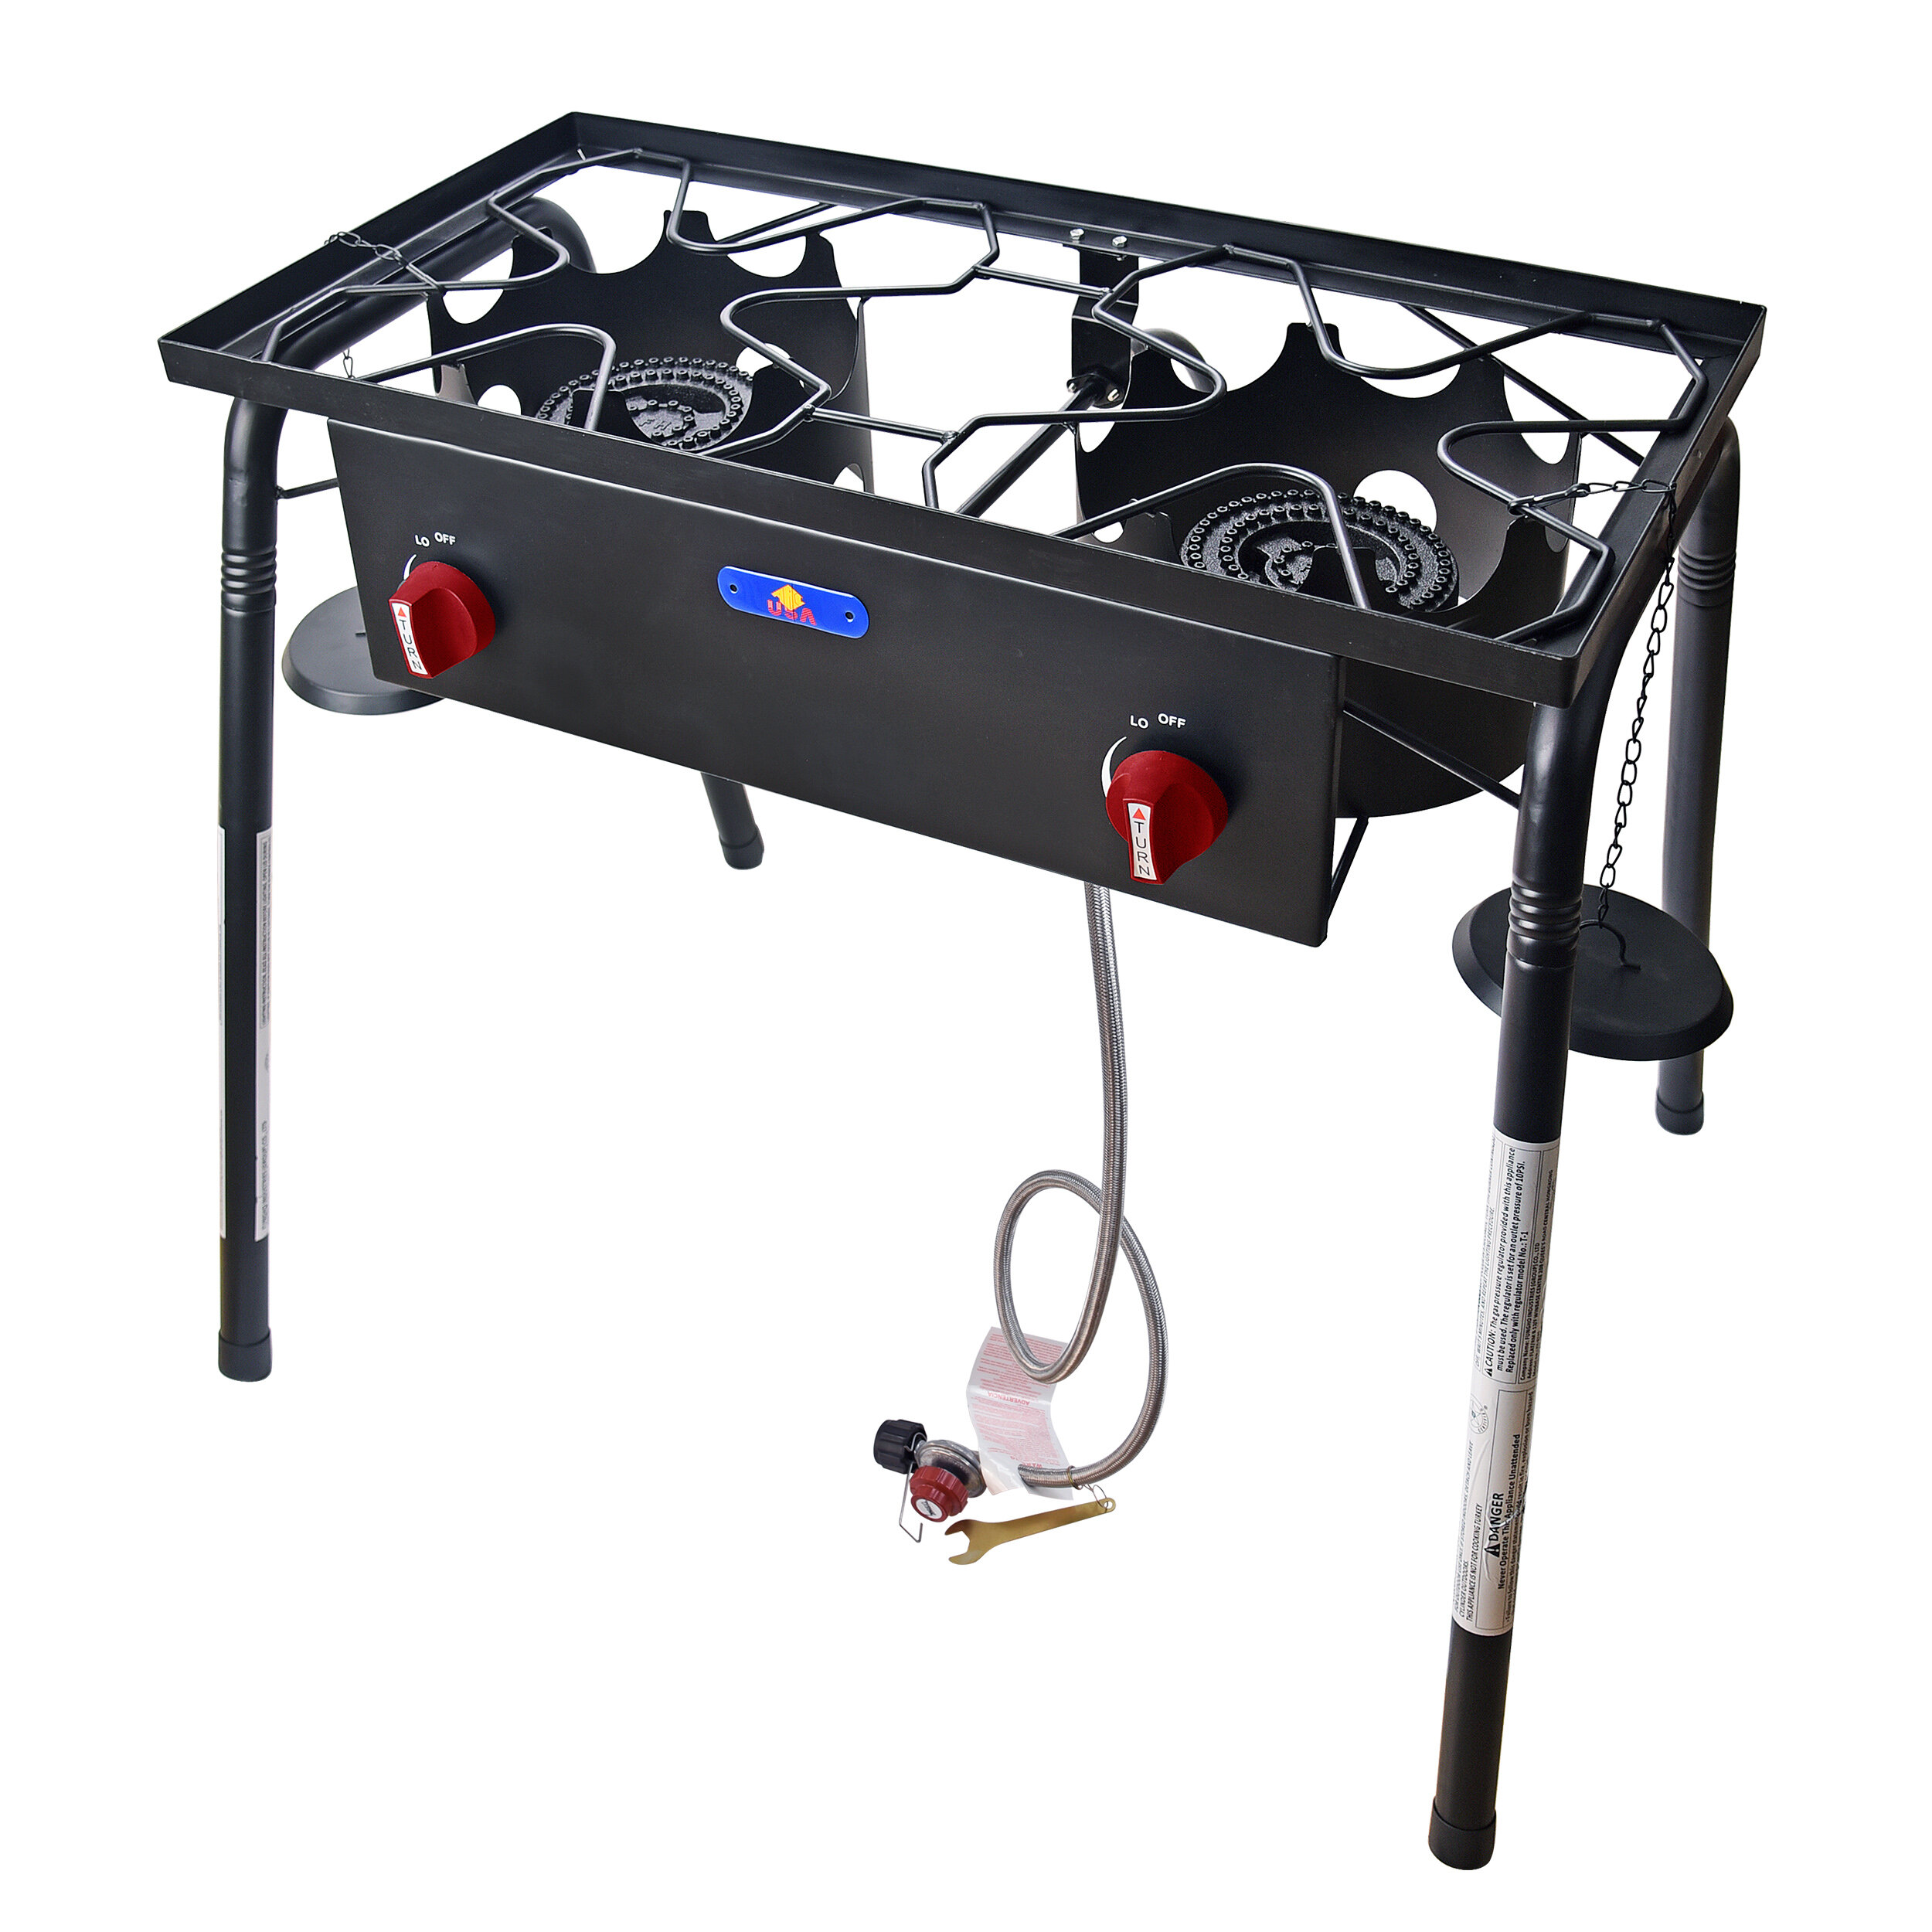 Propane Gas Camping Stove 2-Burner Heating Cooking Indoor/Outdoor